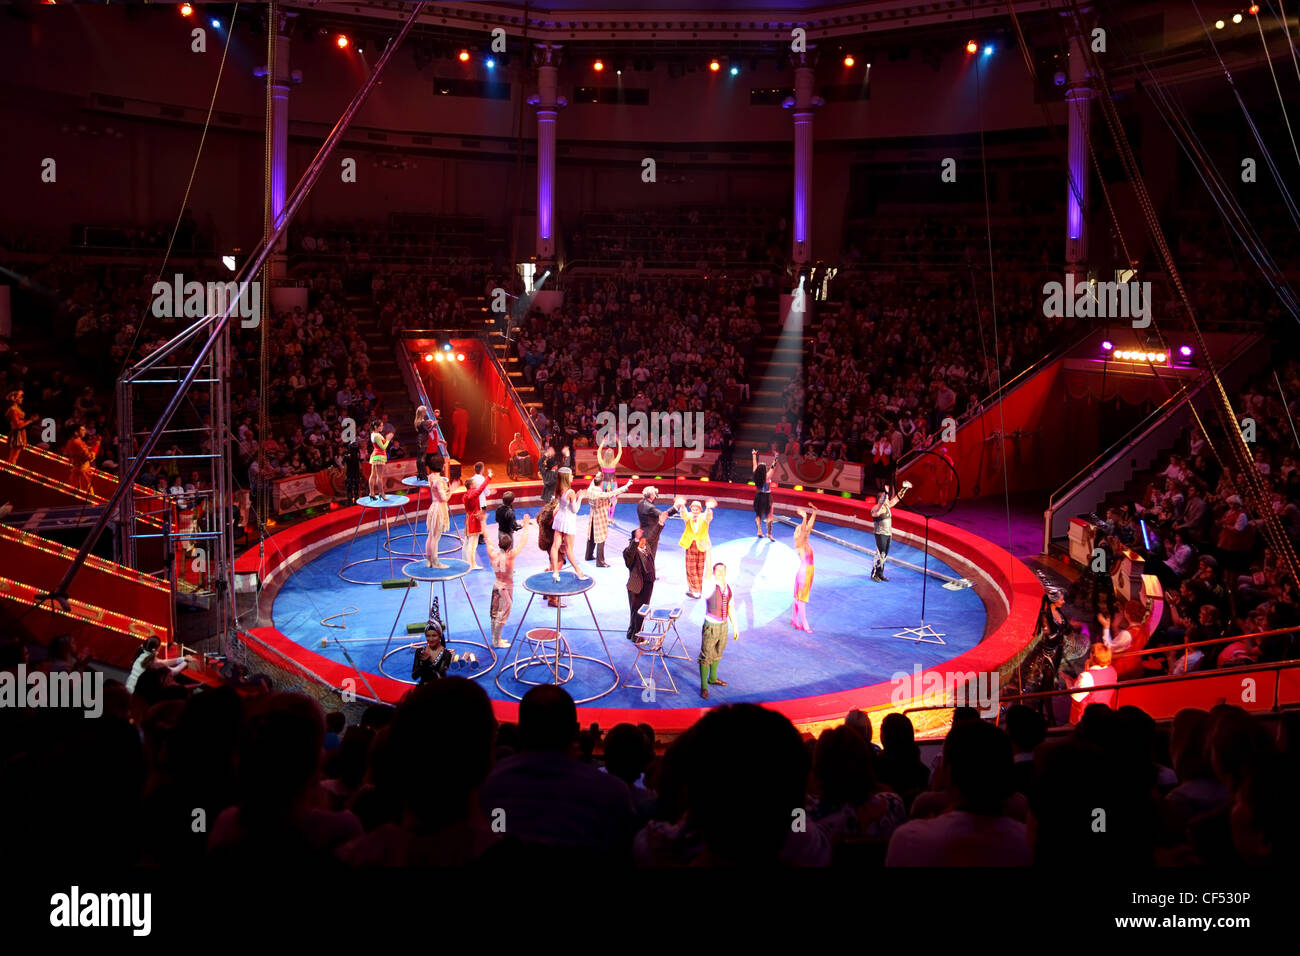 Moskau - 5. Juni - blau-Arena in Moskau Nikulin Circus Leistung Akteure zusammen, 5. Juni 2010 in Moskau, Russland Stockfoto